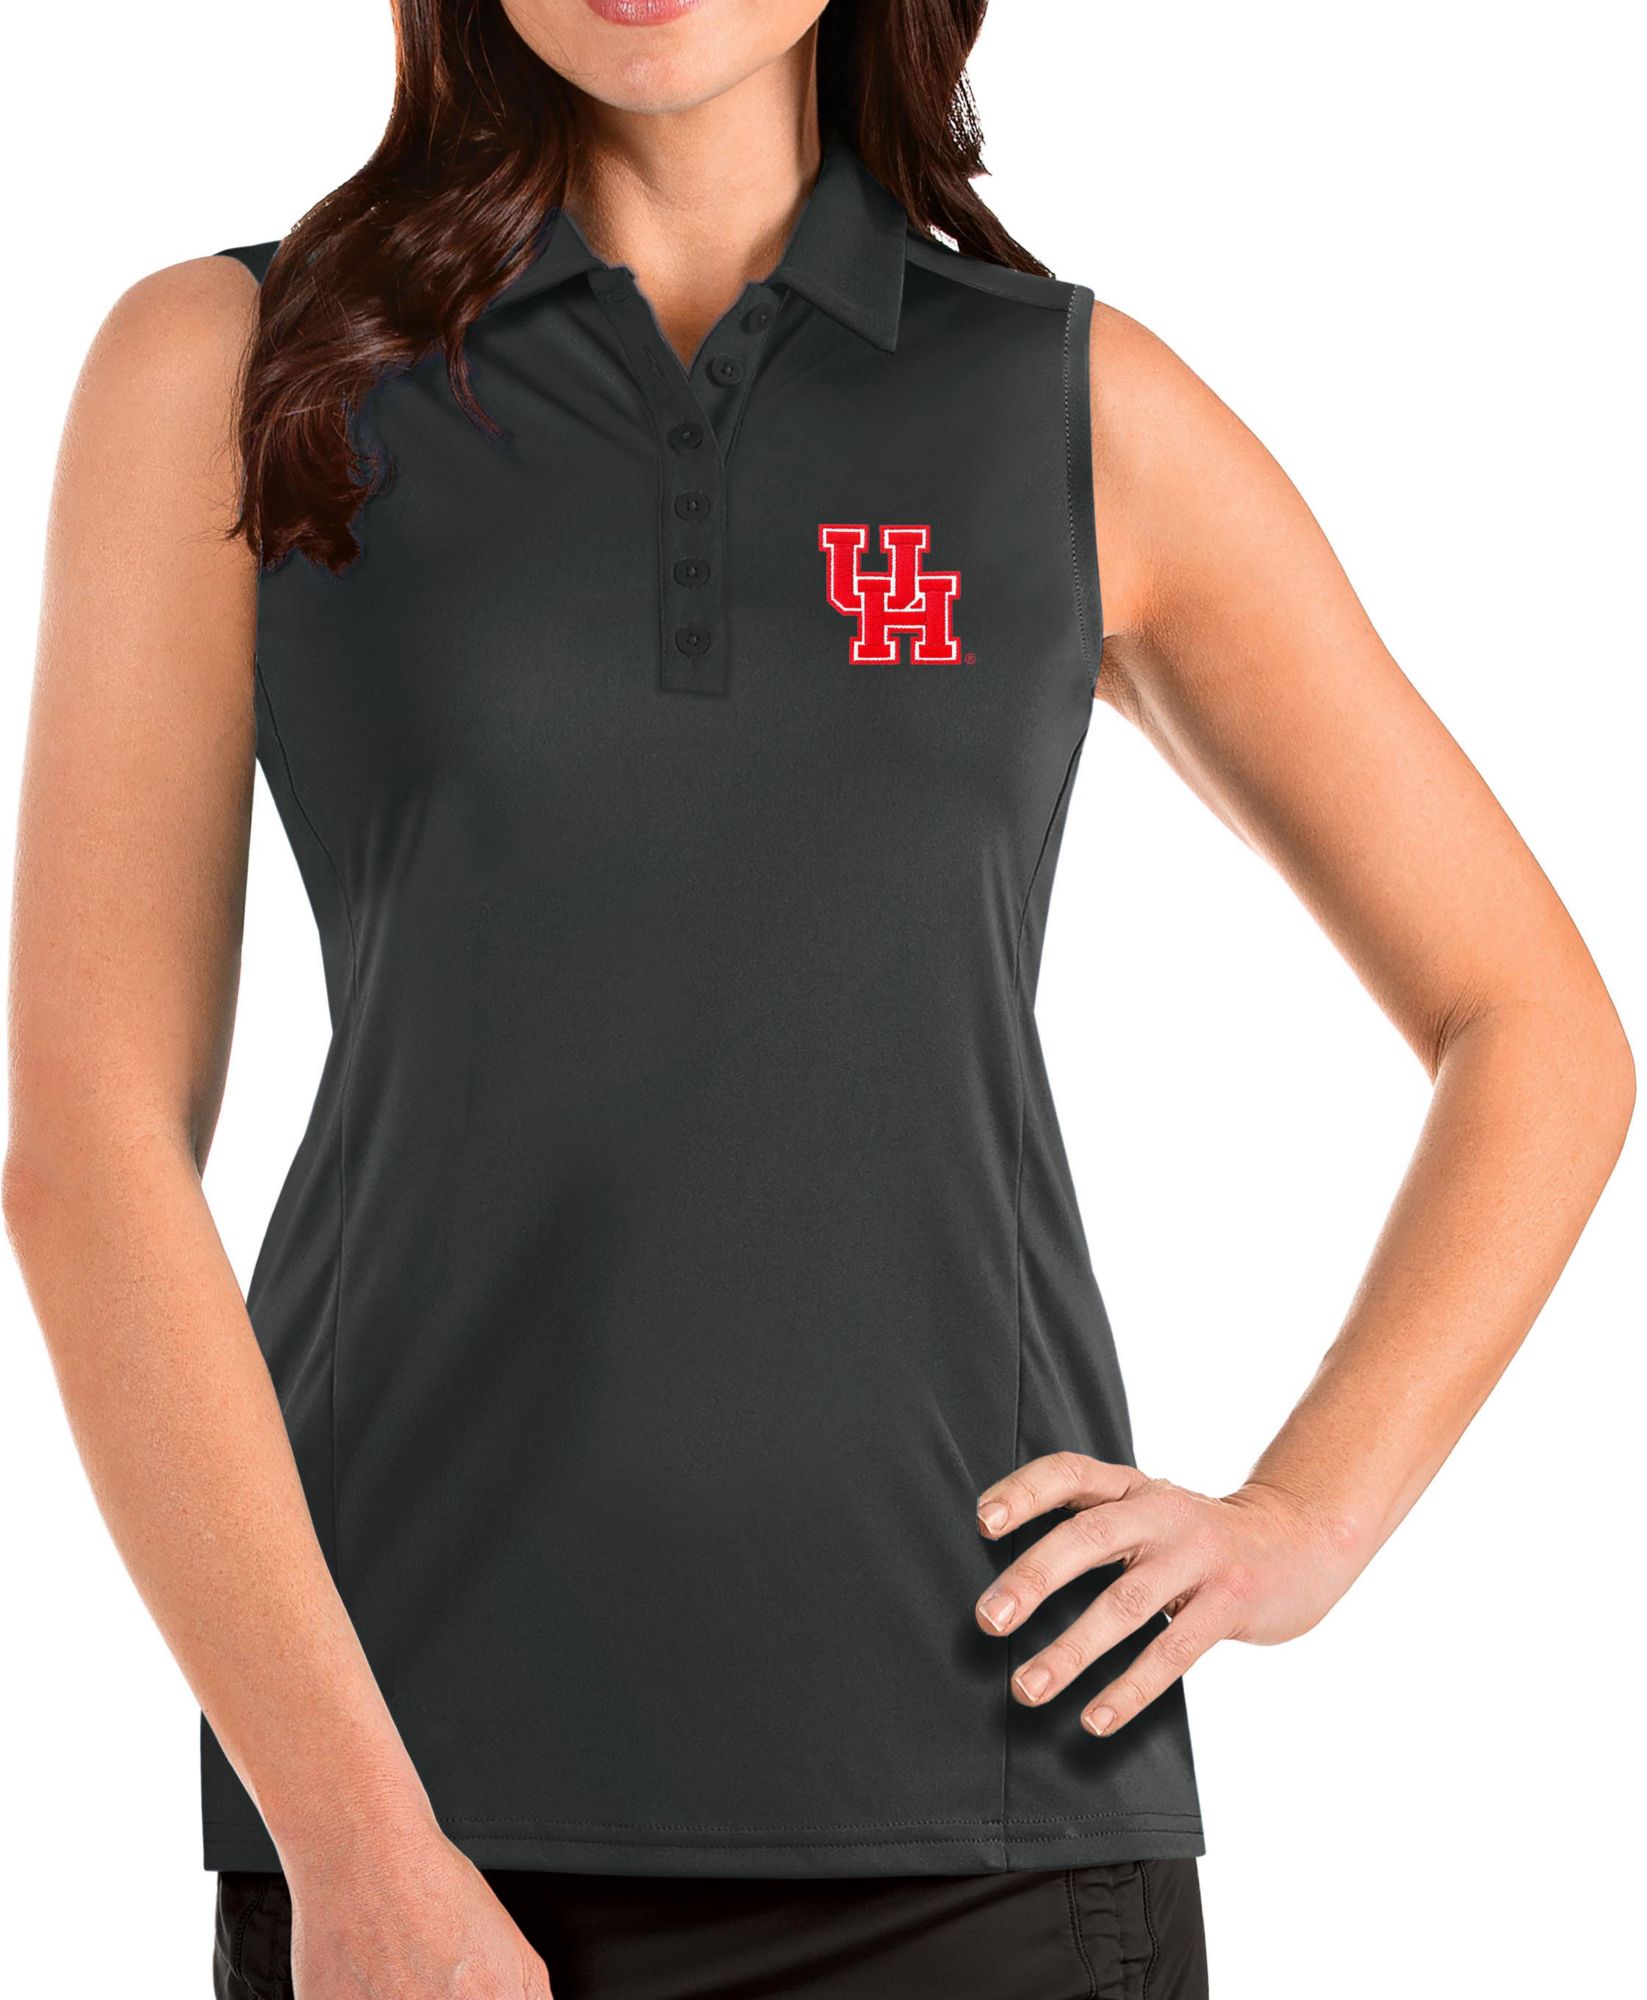 Houston Cougars golf MVP jersey